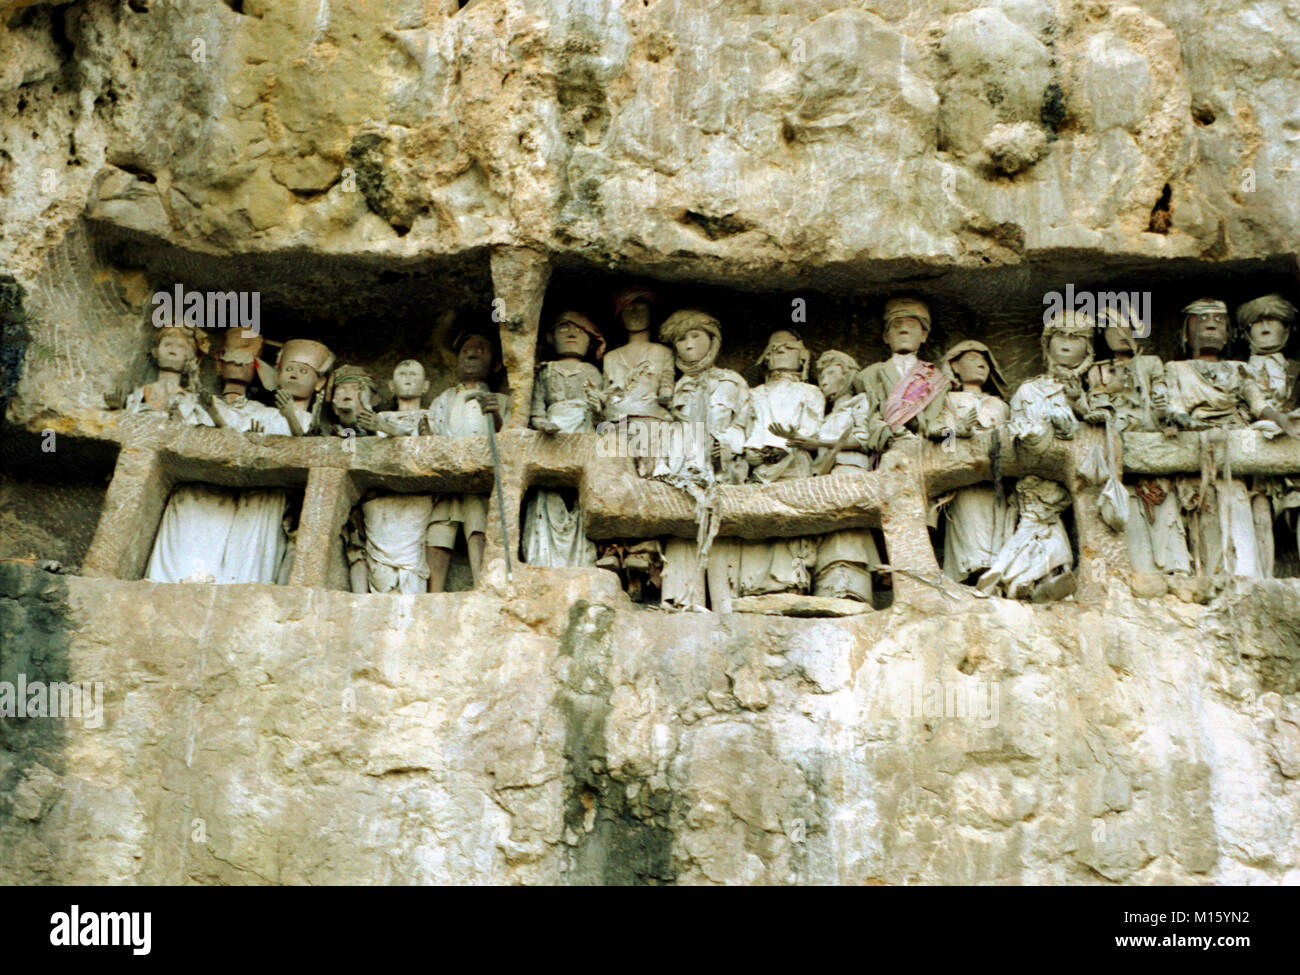 1988 archival image of Toraja cliff graves with Tau Tau or effigies of the dead, Suaya, Sulawesi, eastern Indonesia Stock Photo